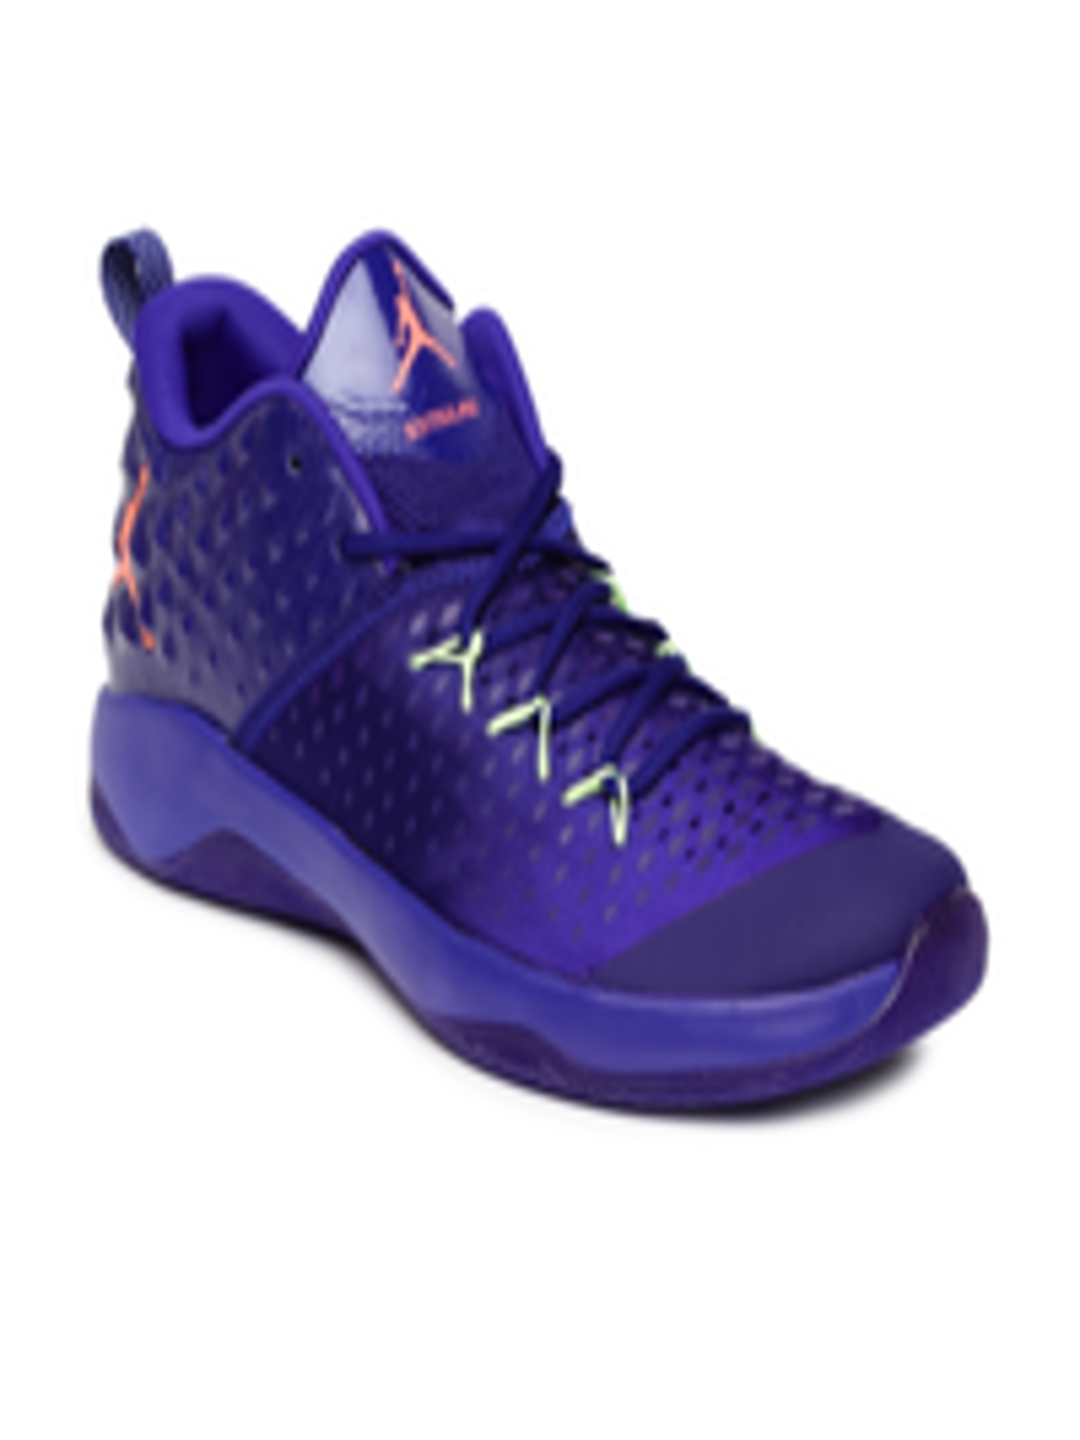 Buy Nike Men Purple Jordan Extra Fly Basketball Shoes